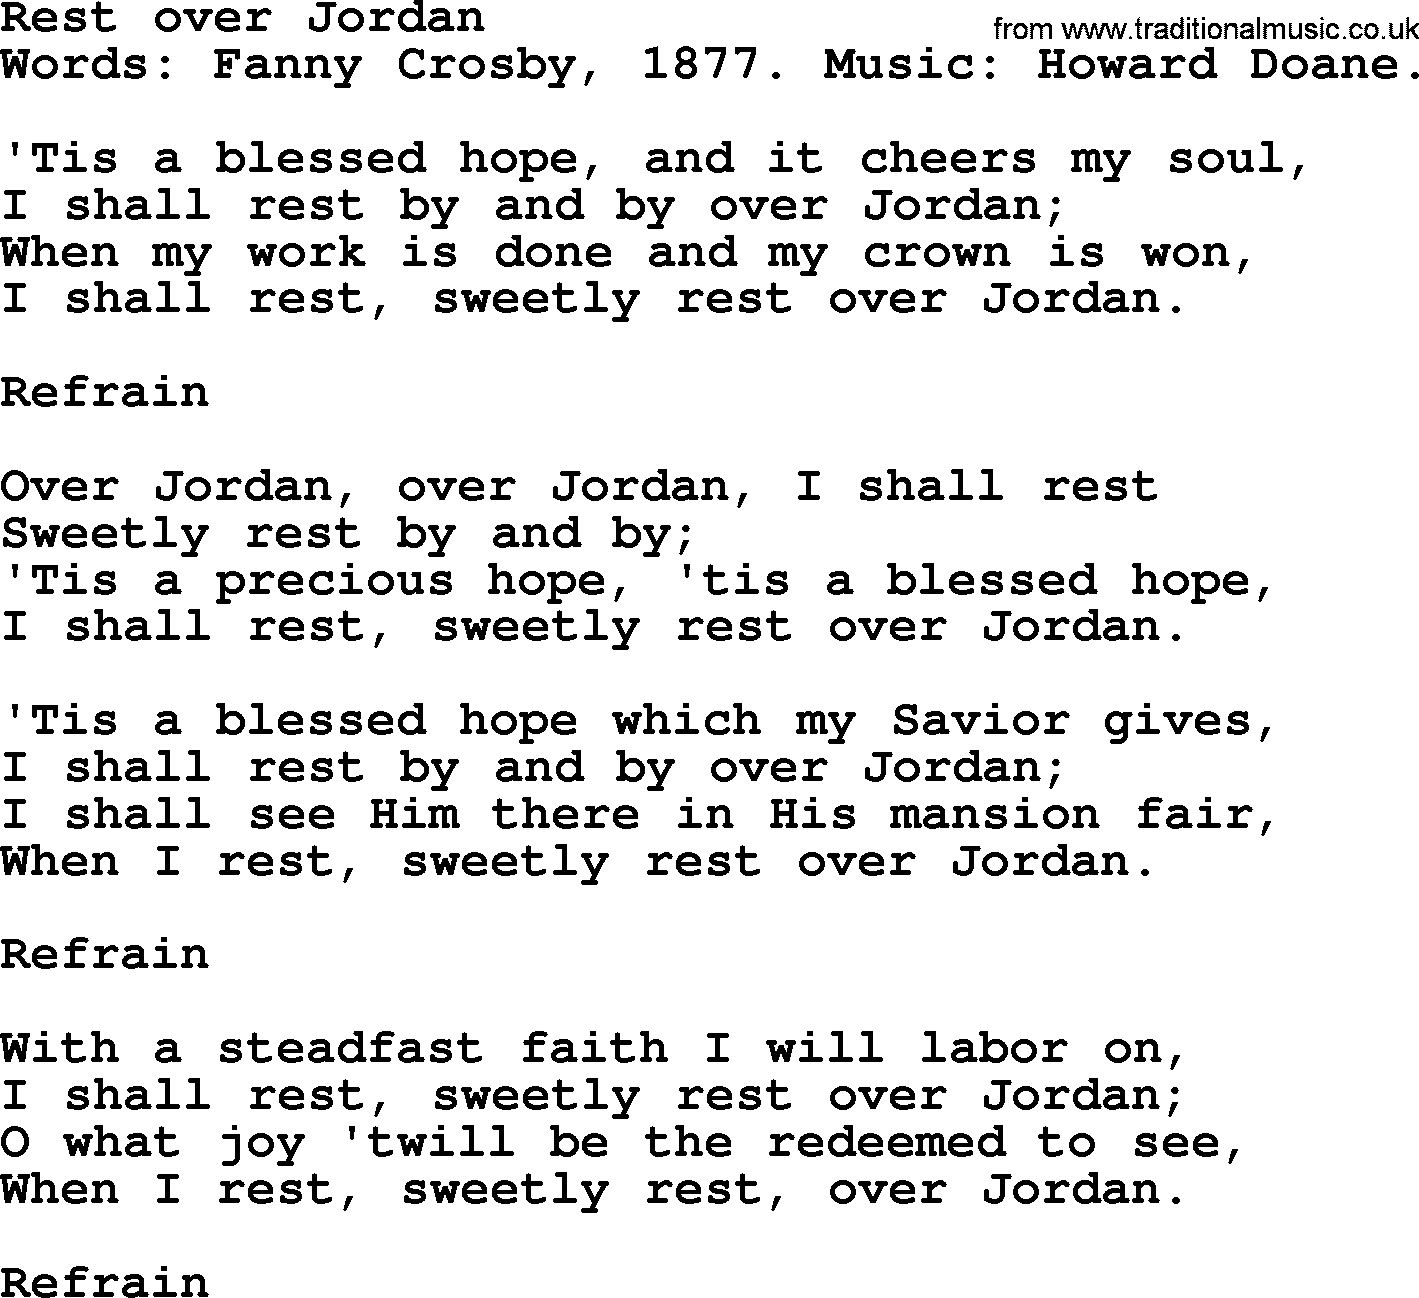 Fanny Crosby song: Rest Over Jordan, lyrics